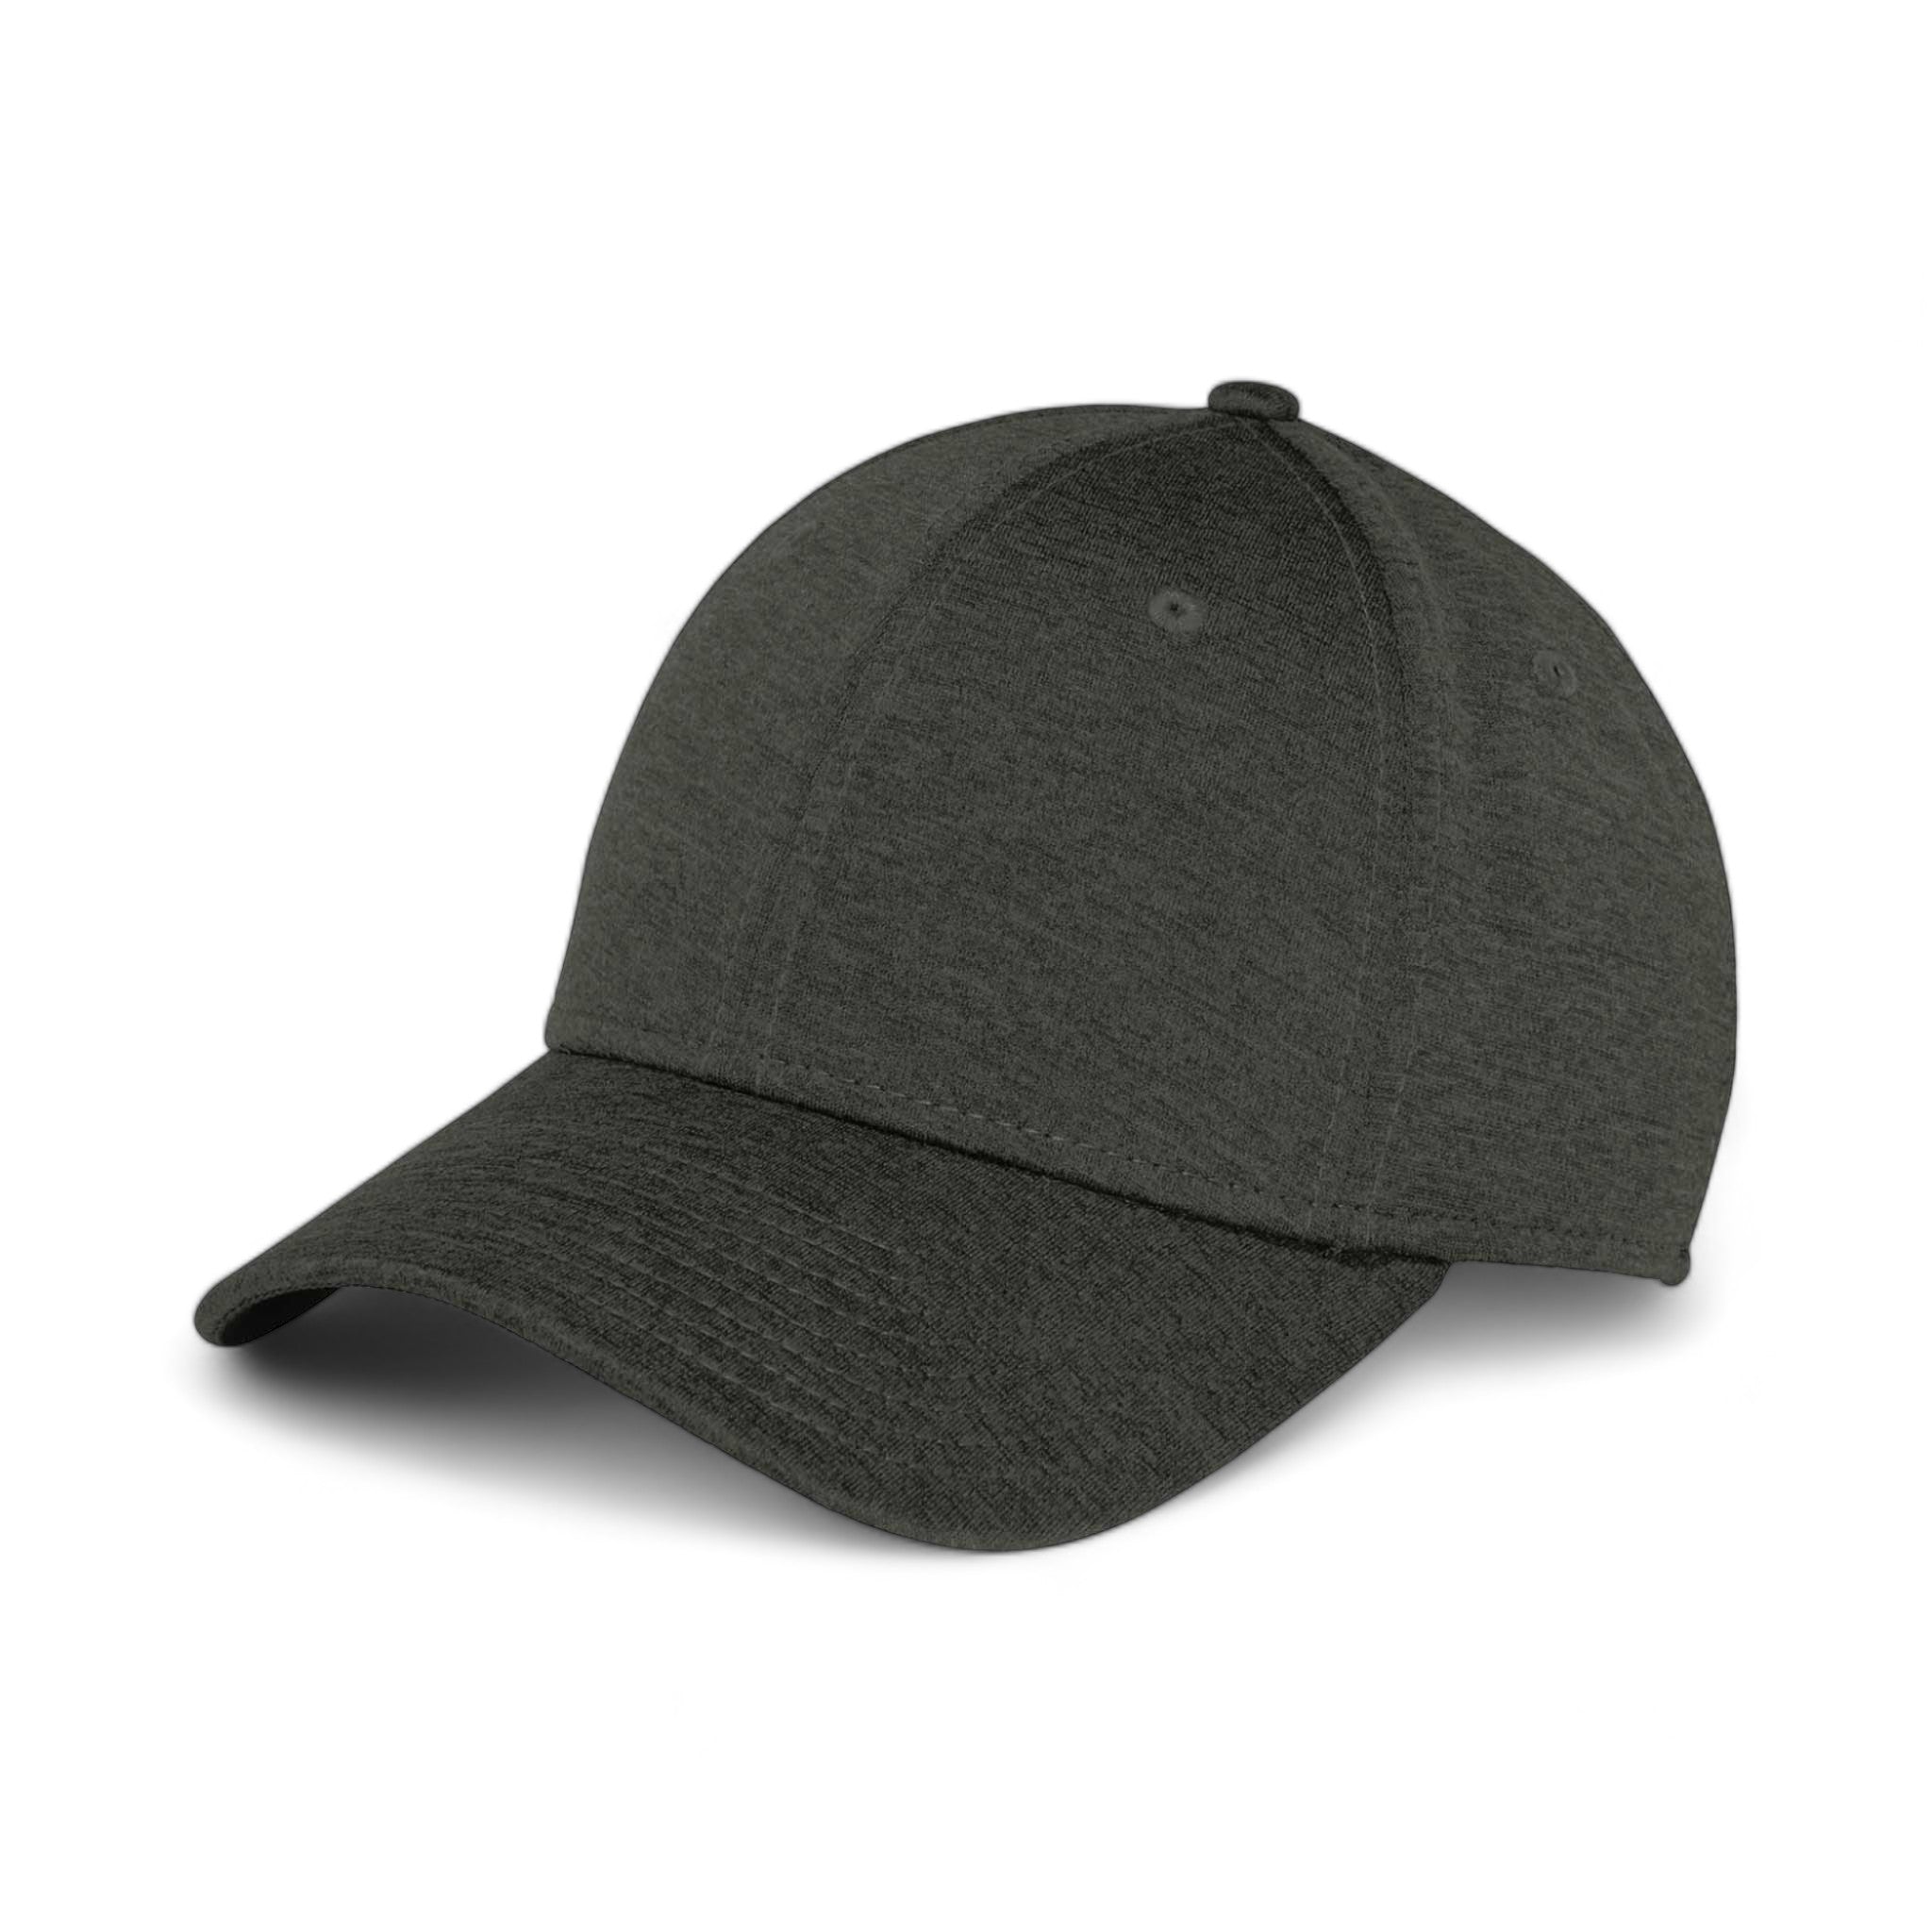 Side view of New Era NE703 custom hat in black shadow heather